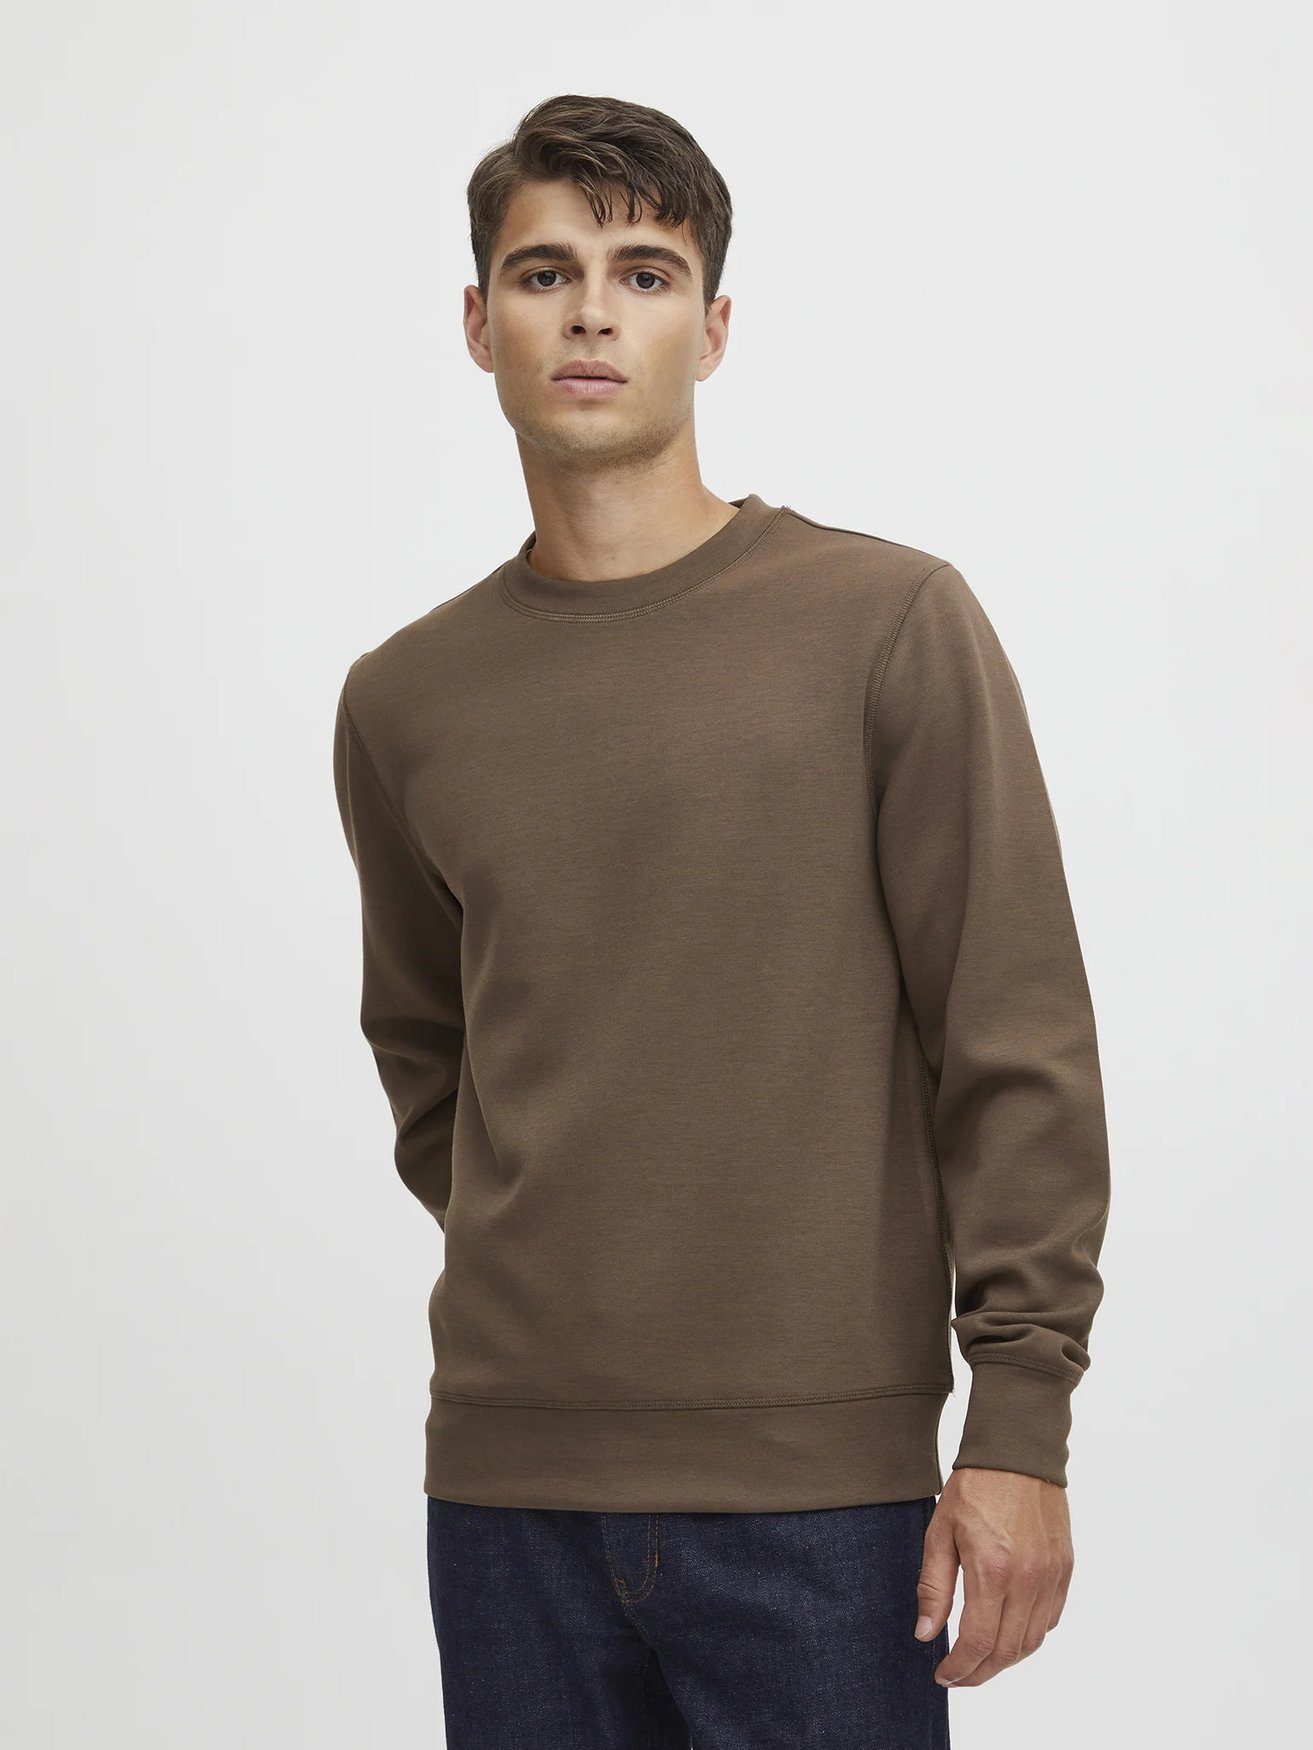 Braun Pullover Sweatshirt in Casual Basic CFSebastian Friday Langarm 5917 Rundhals